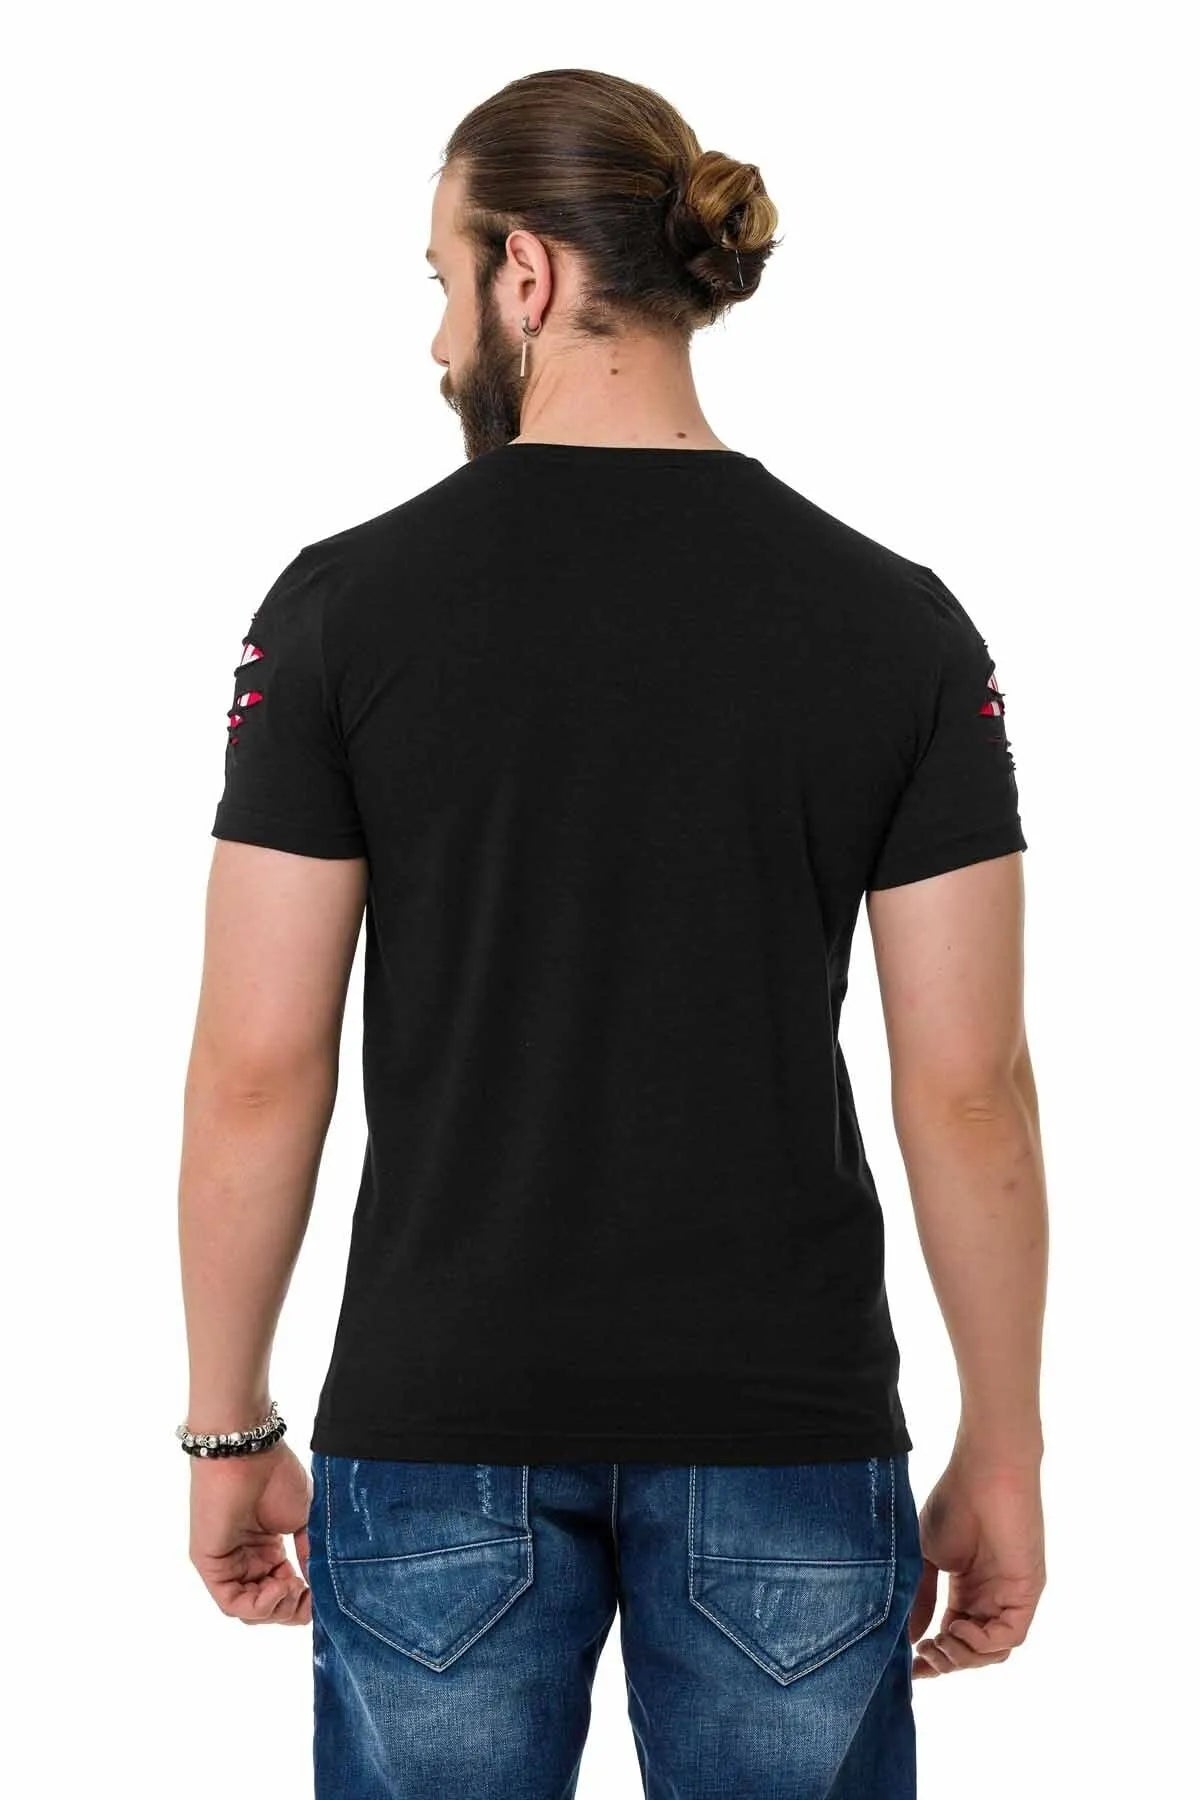 Cipo & Baxx ILLYA Herren black T-Shirt CT772